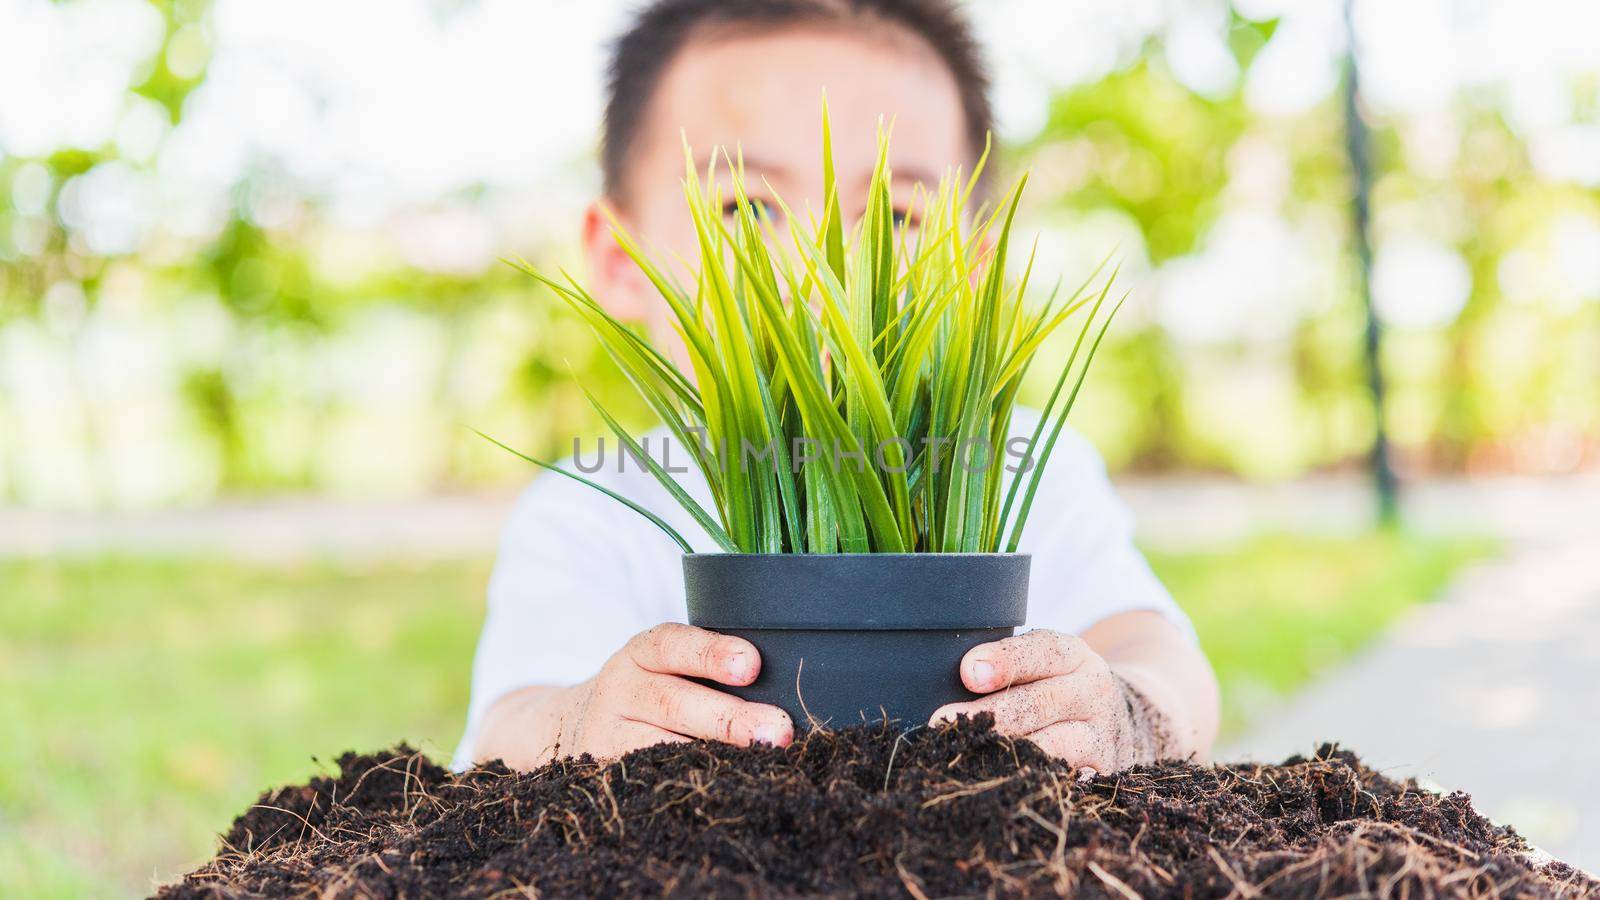 little child boy planting young tree on black soil by Sorapop